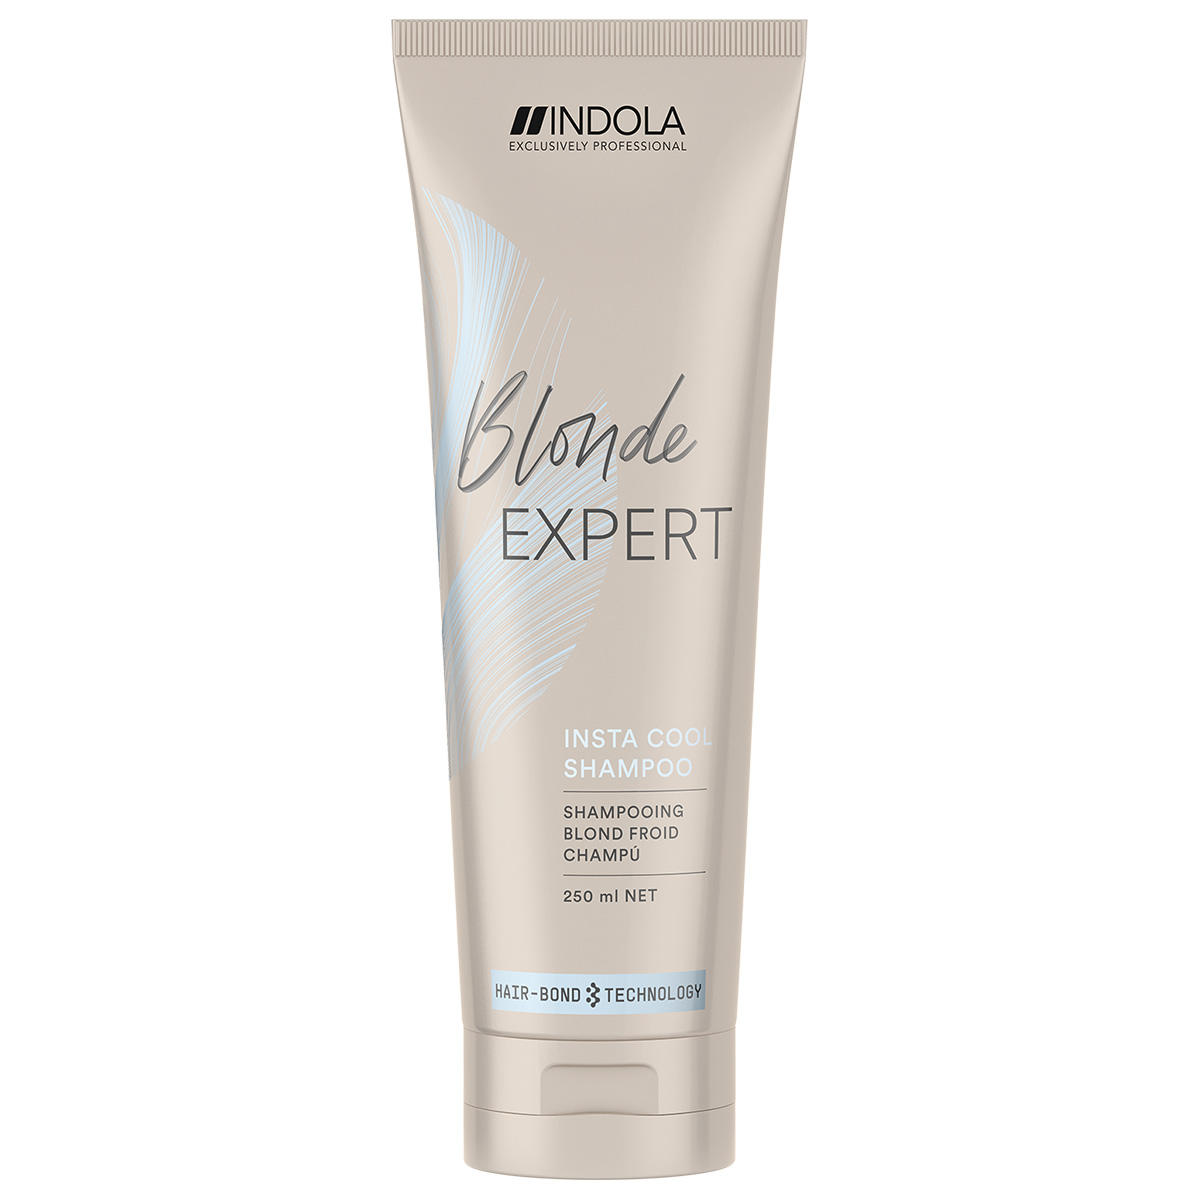 Indola Blonde Expert Insta Cool Shampoo  - 1